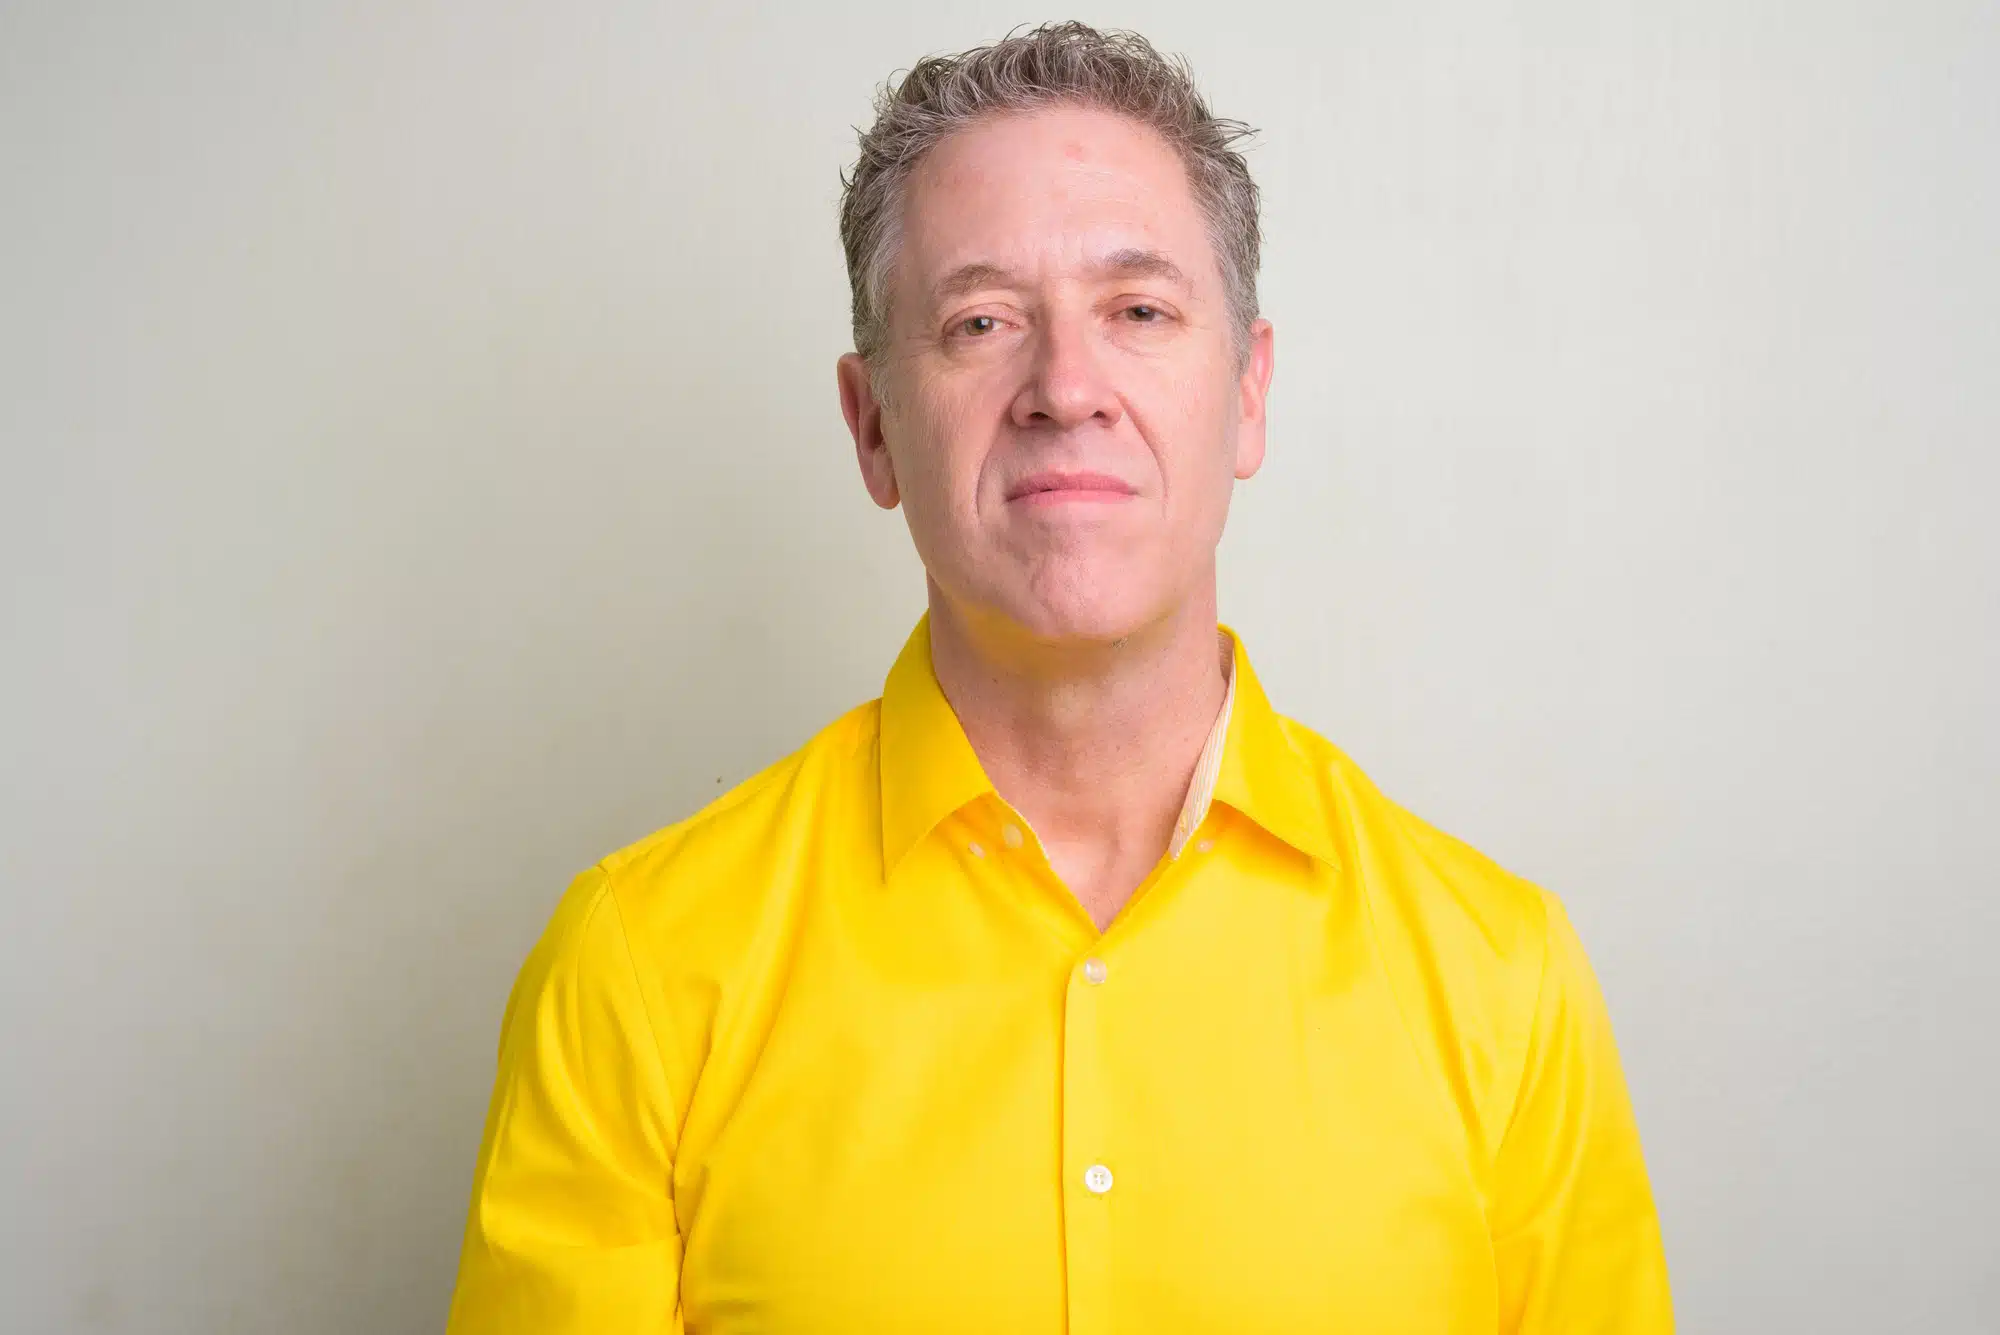 Portrait of mature businessman wearing yellow shirt